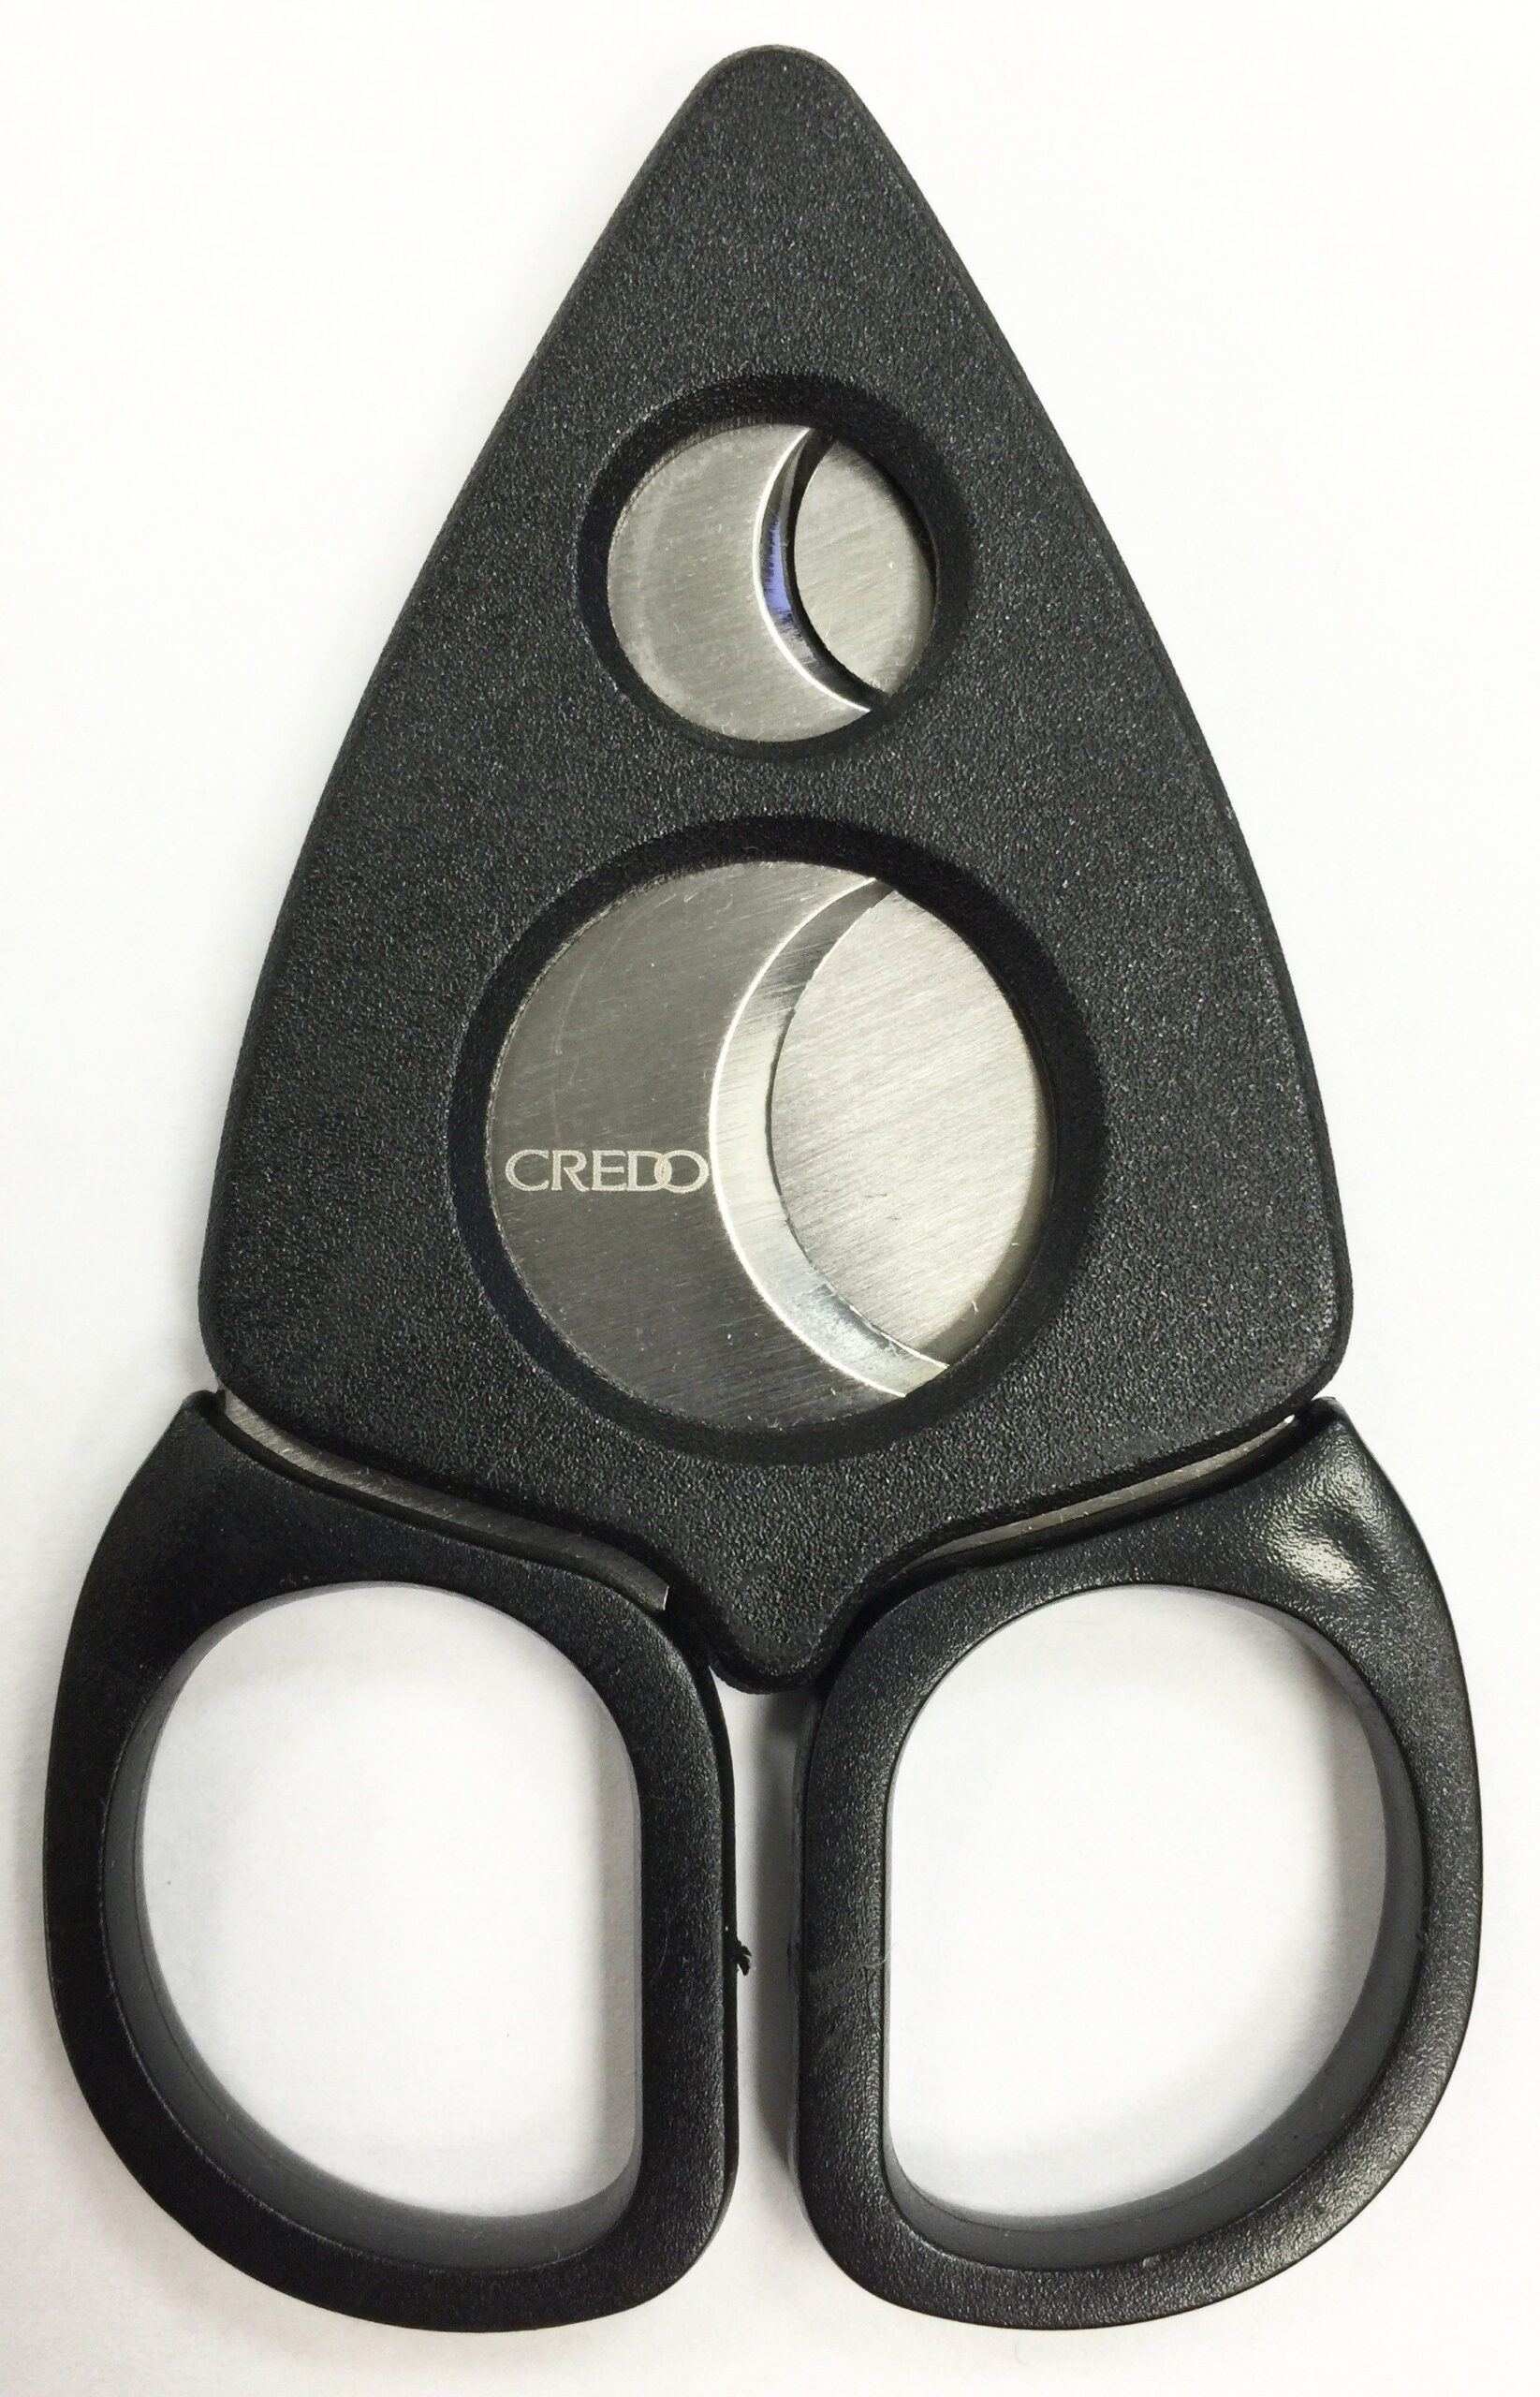 Cigar News: Credo Announces New “Special T” Dual-Blade Cutter